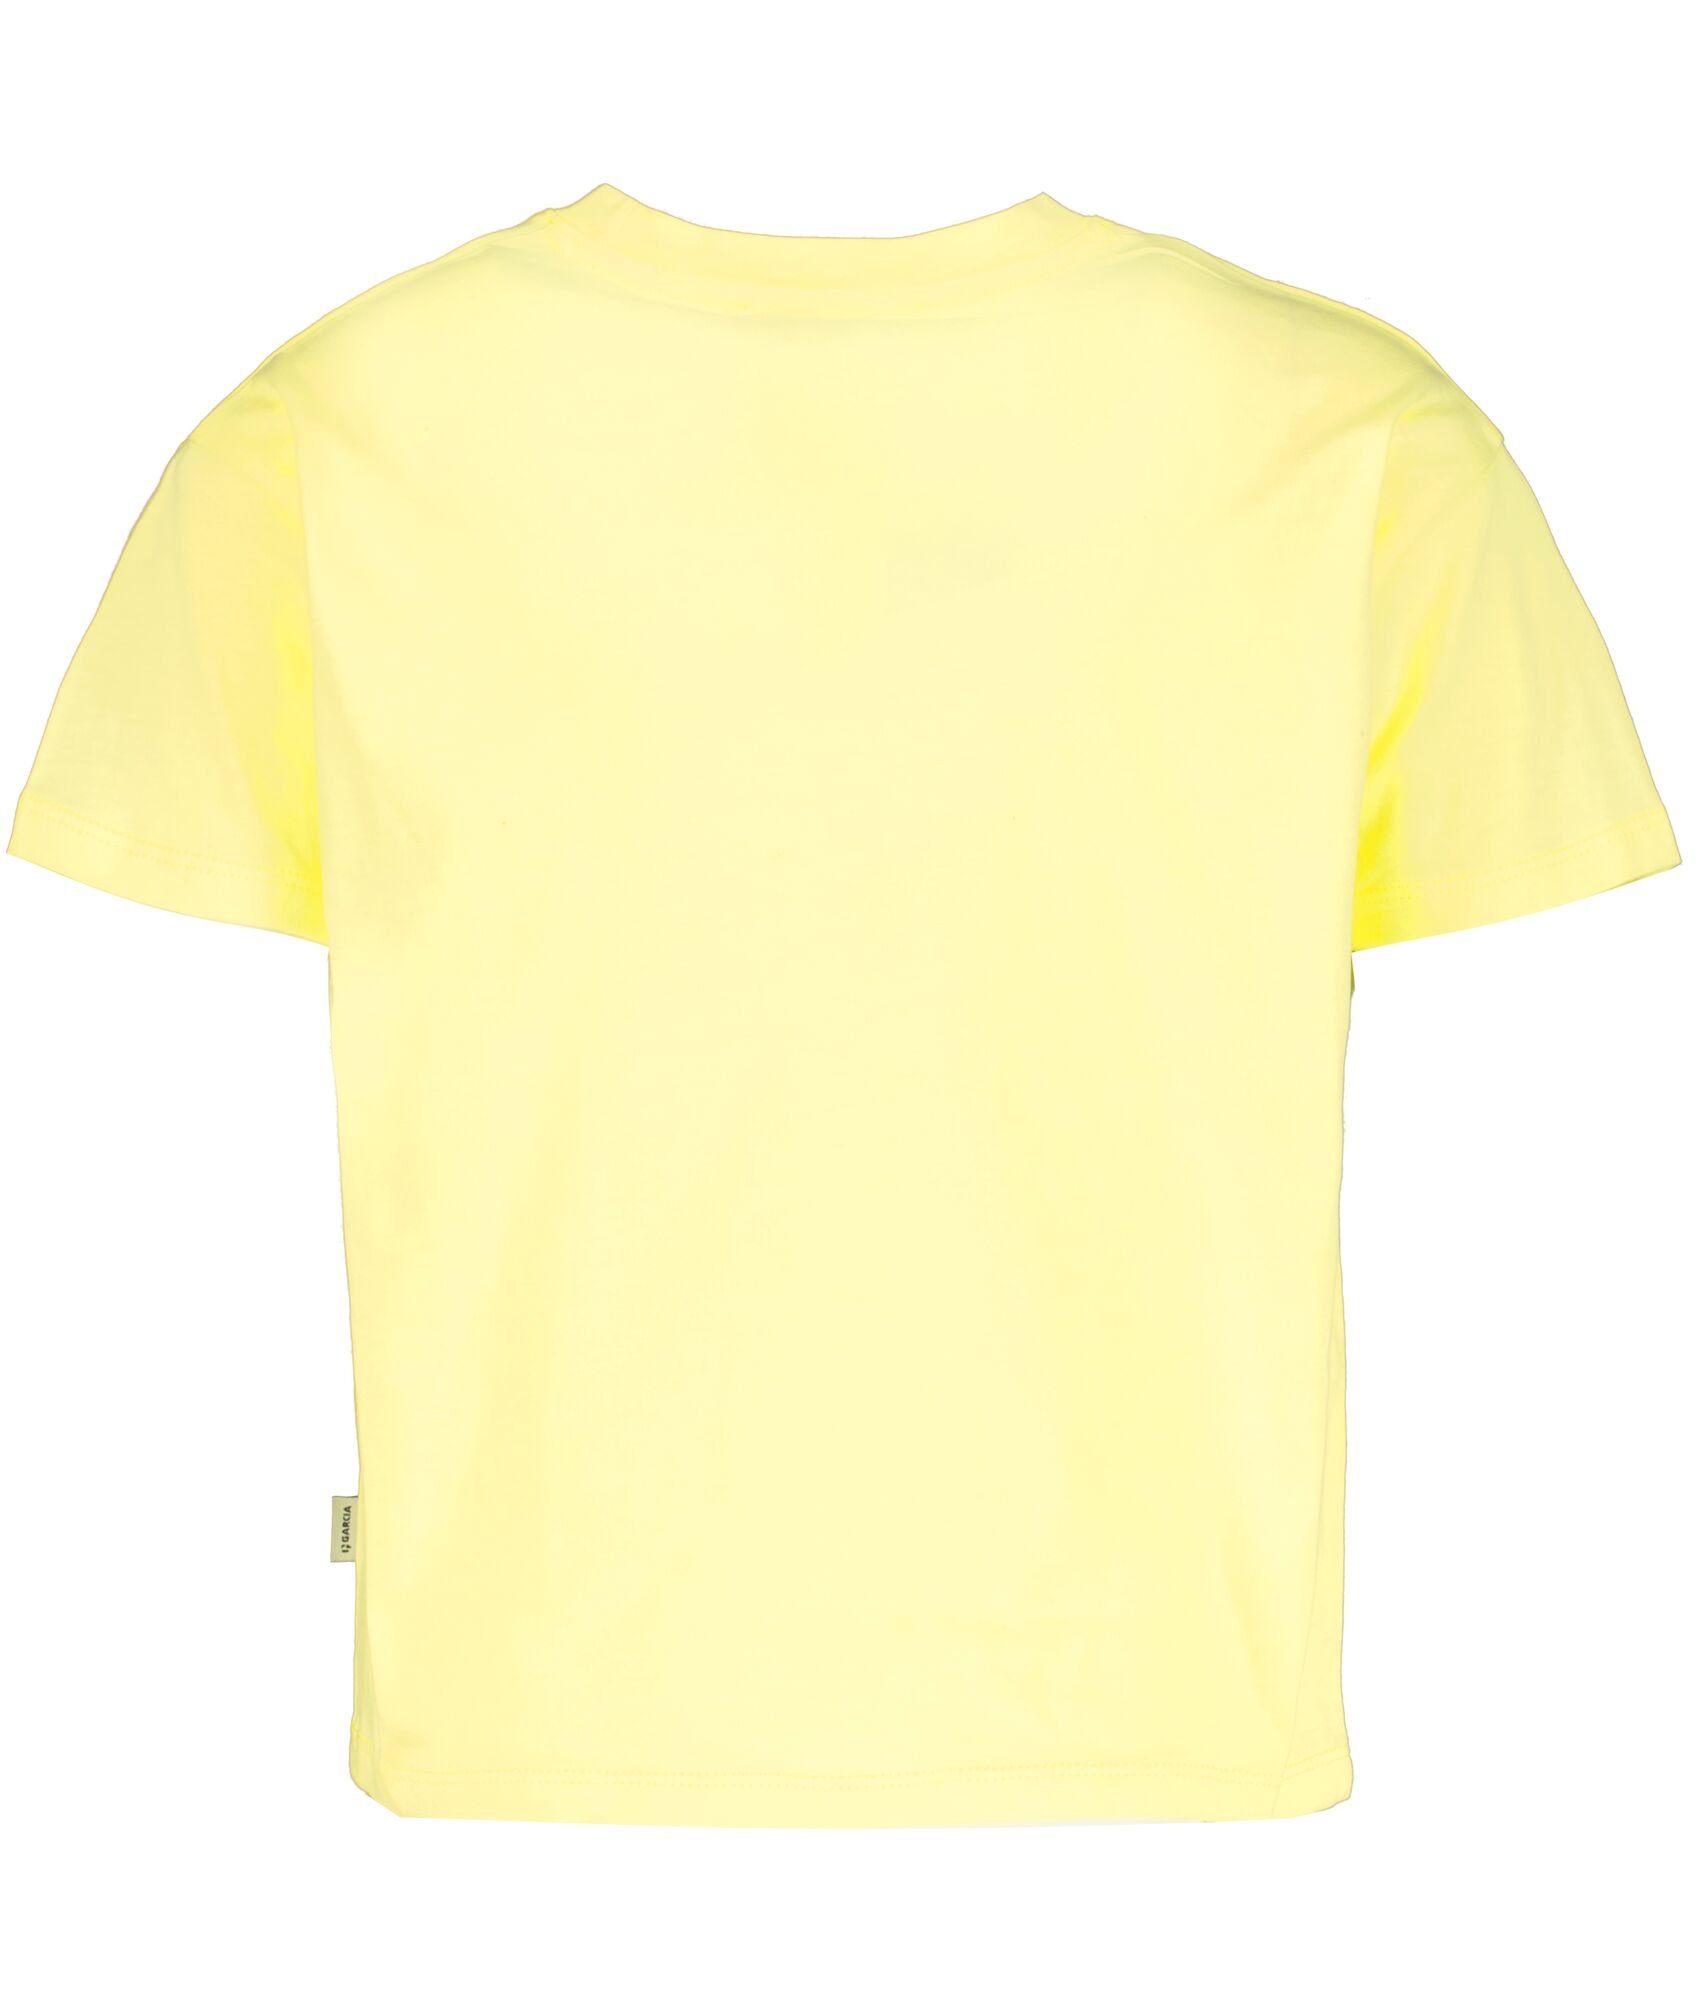 Garcia T-Shirt Basic lemon fresh cropped